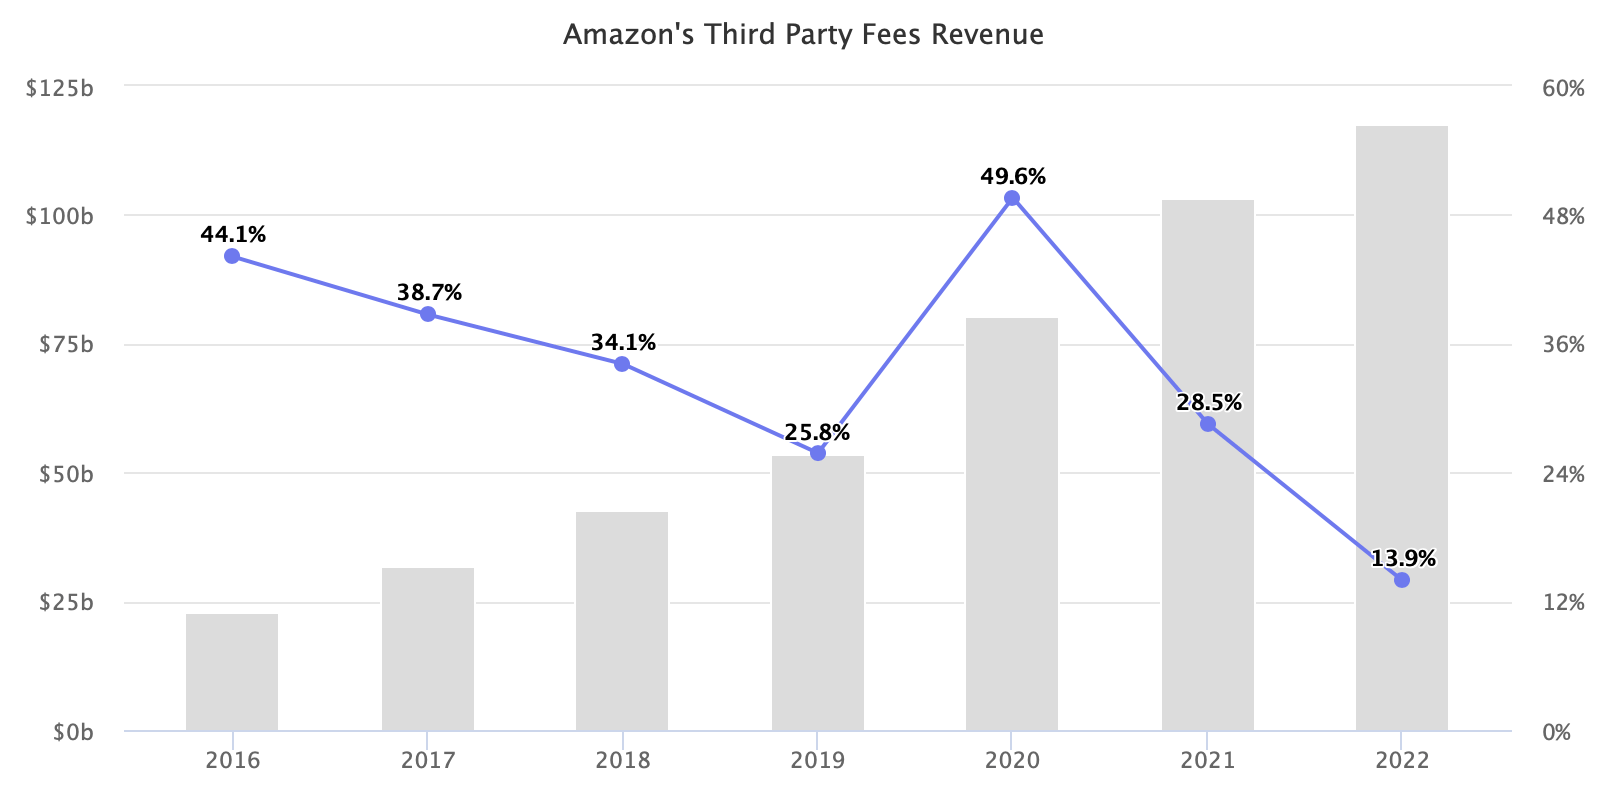 Amazon's Third Party Fees Revenue